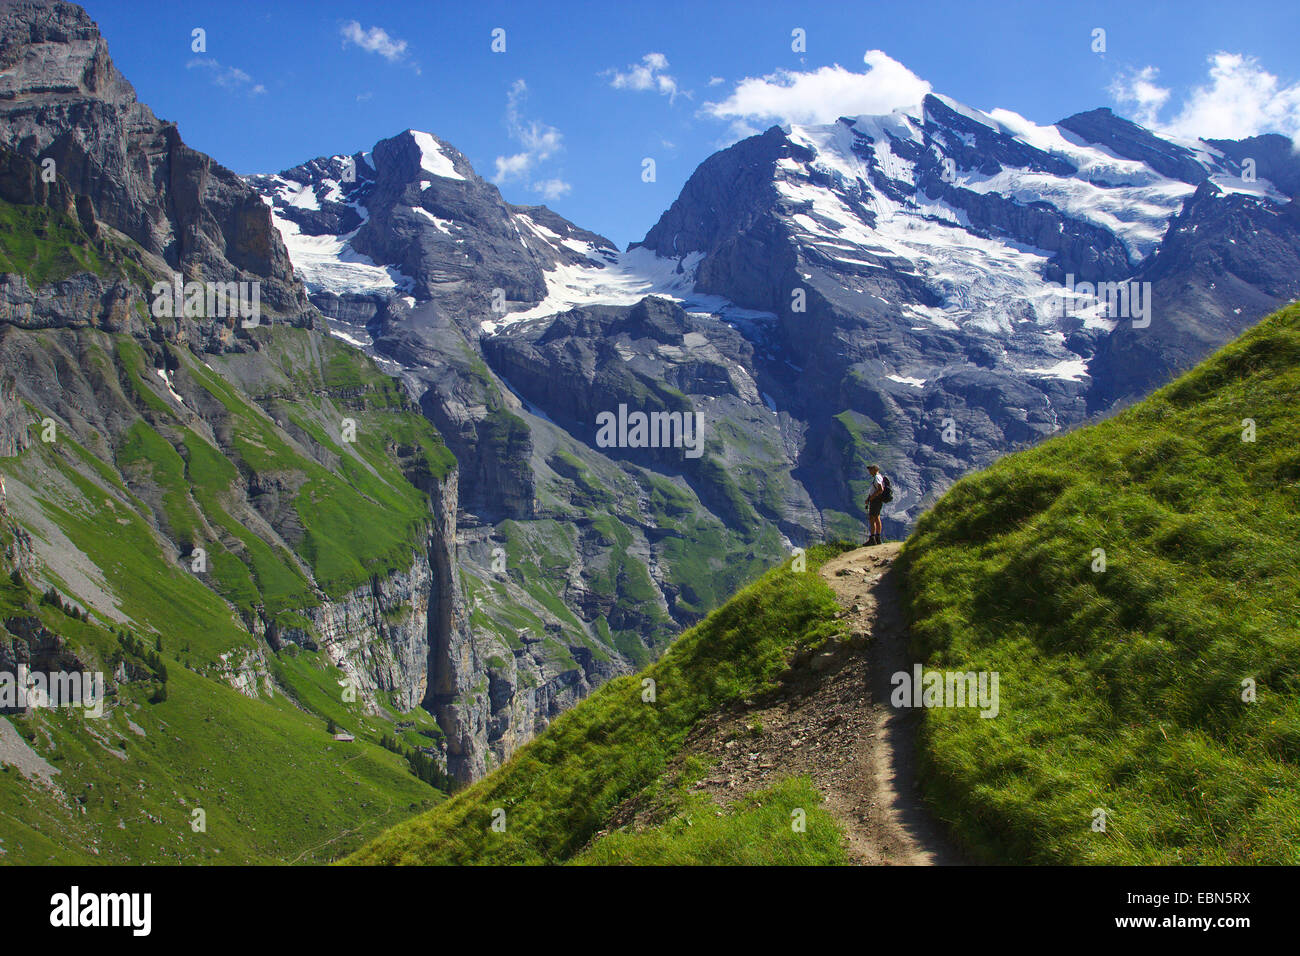 wanderer on a path in front of Doldenhorn near Kandersteg, Switzerland Stock Photo